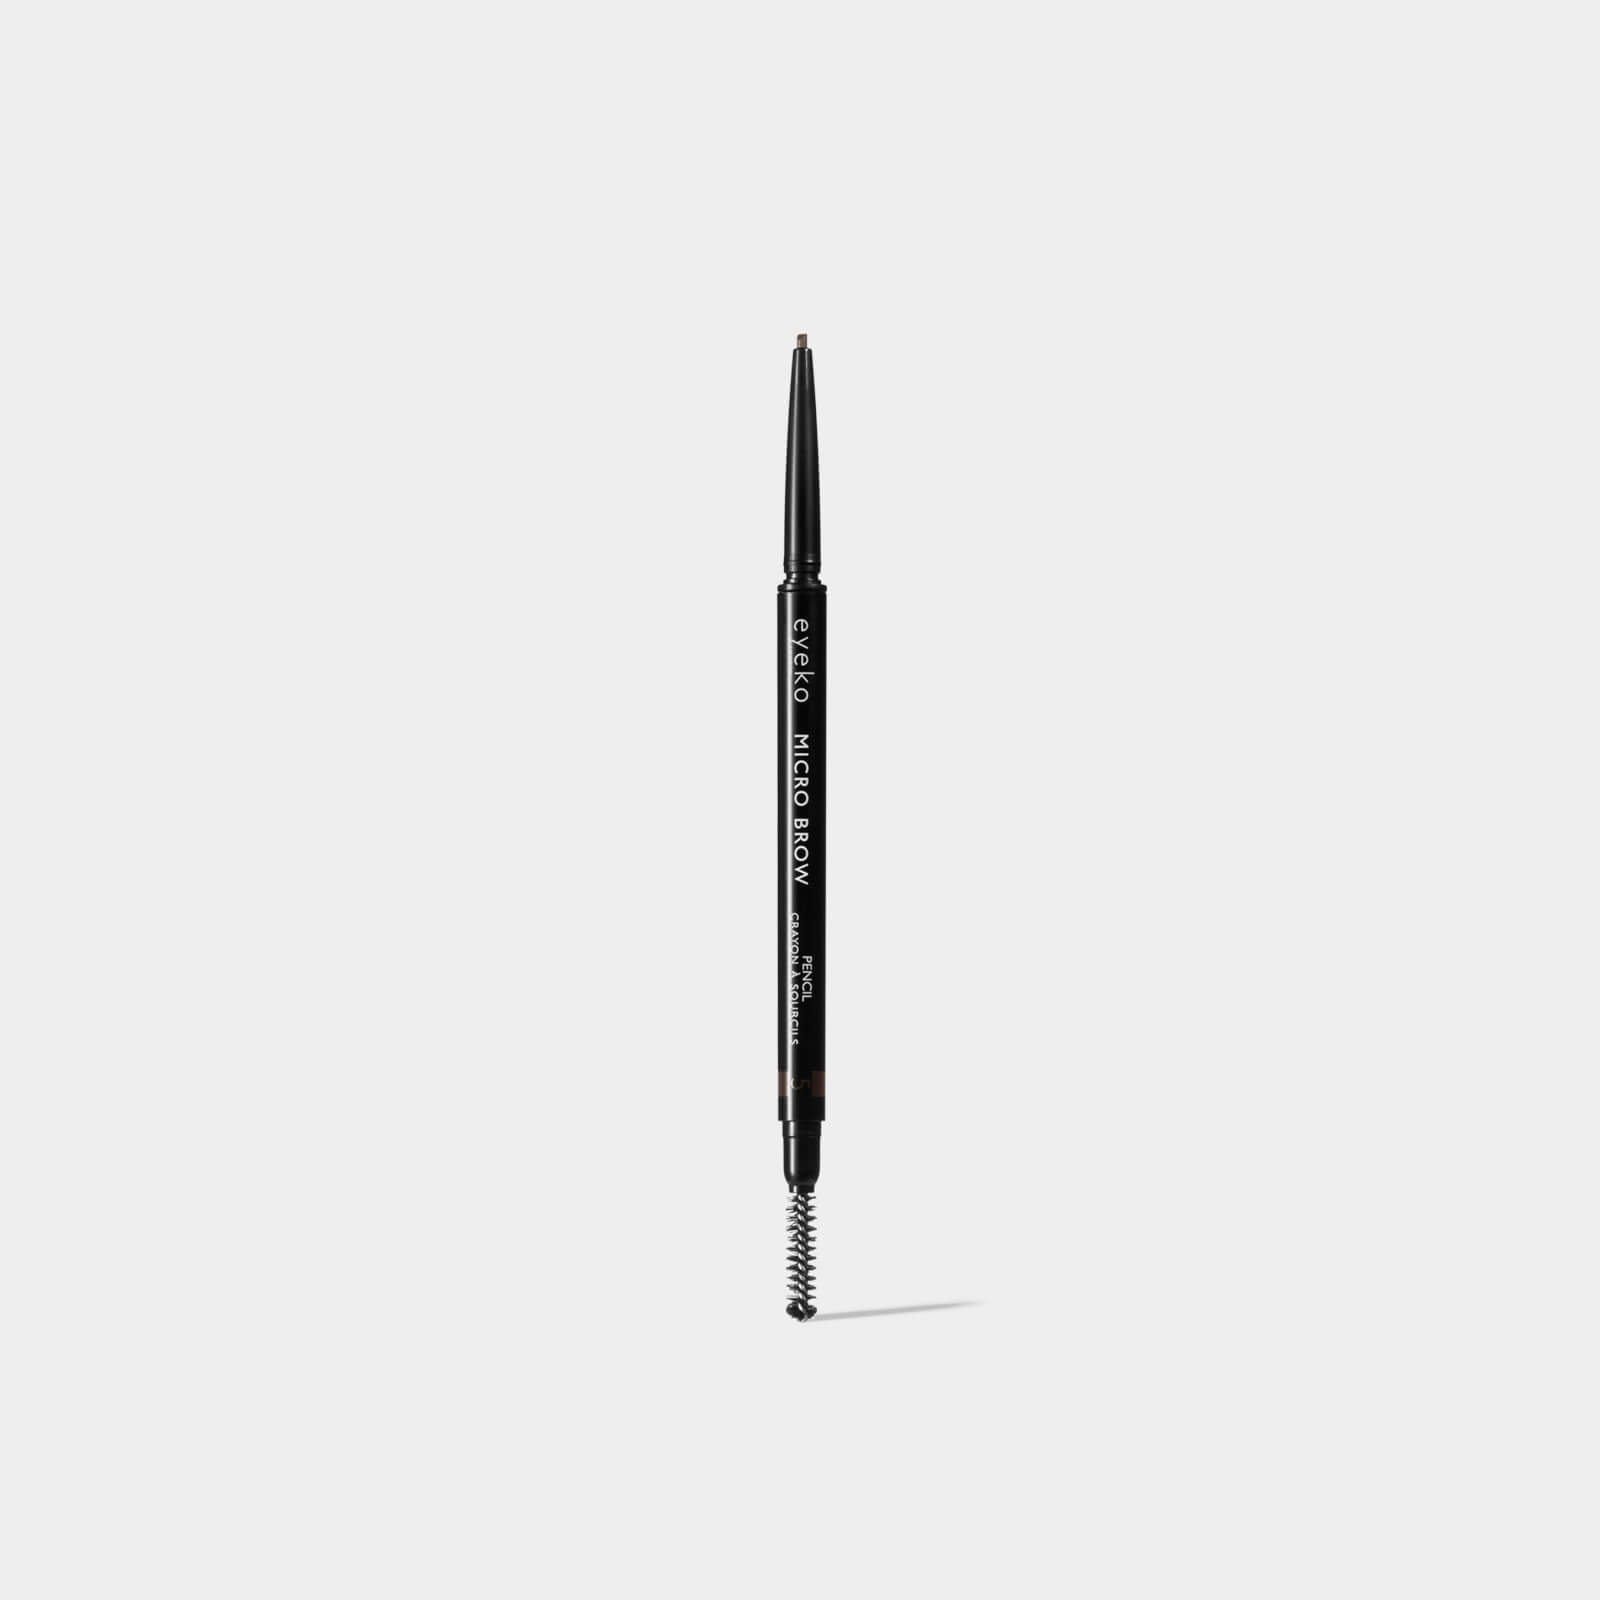 Eyeko Micro Brow Precision Pencil 2g (various Shades) - 5 - Black Brown